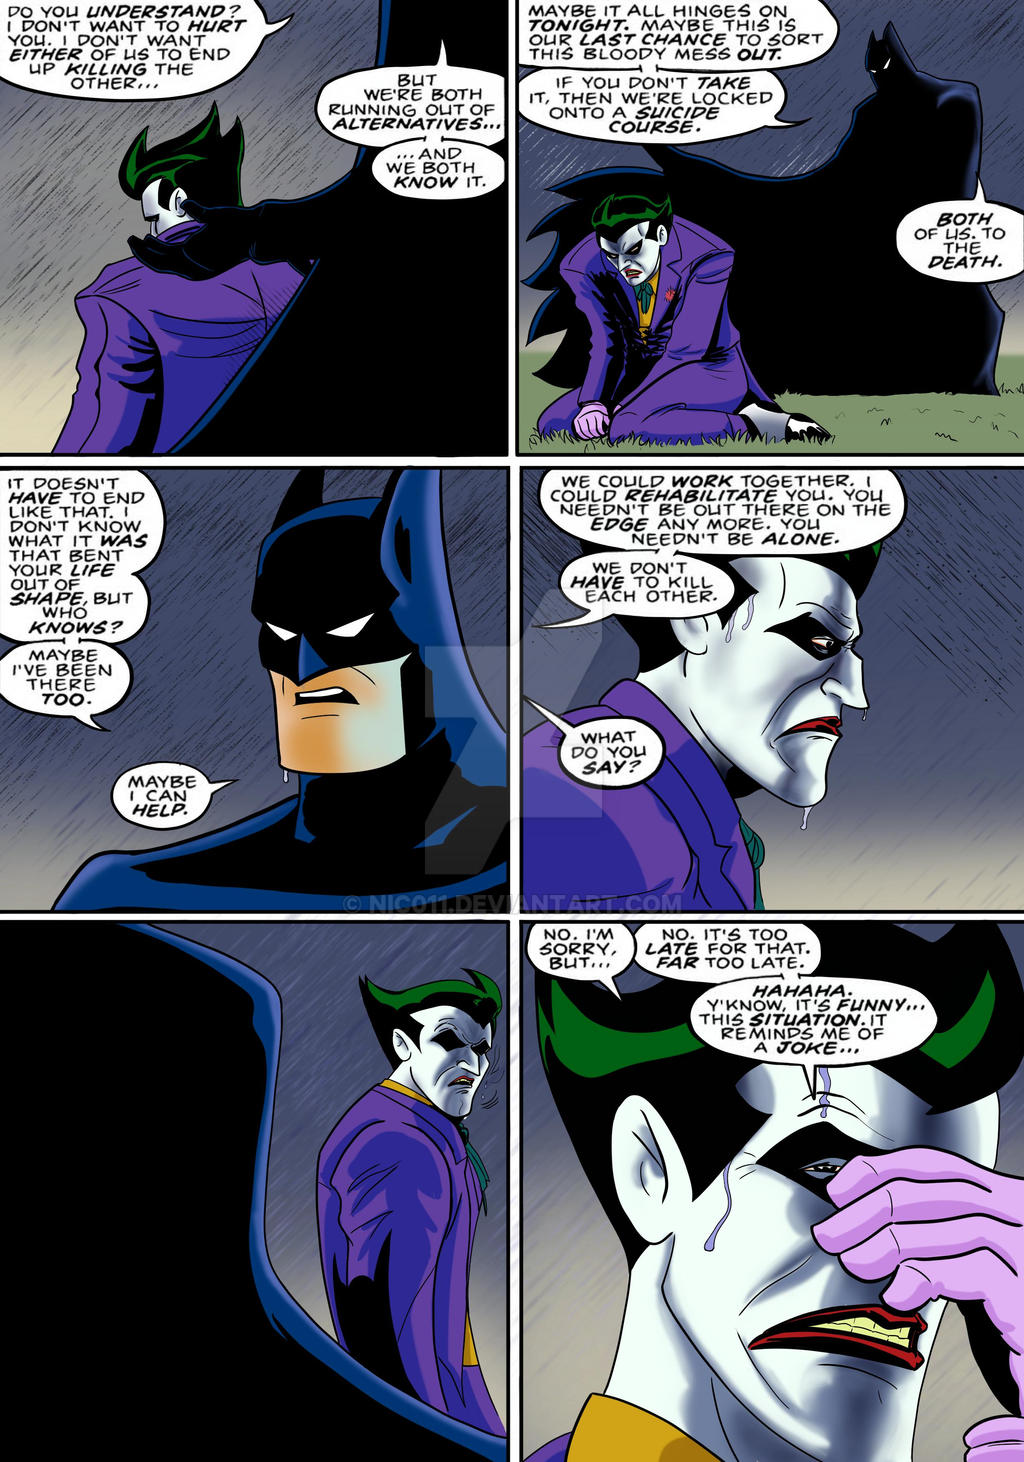 Batman The Killing joke TAS by nic011 on DeviantArt